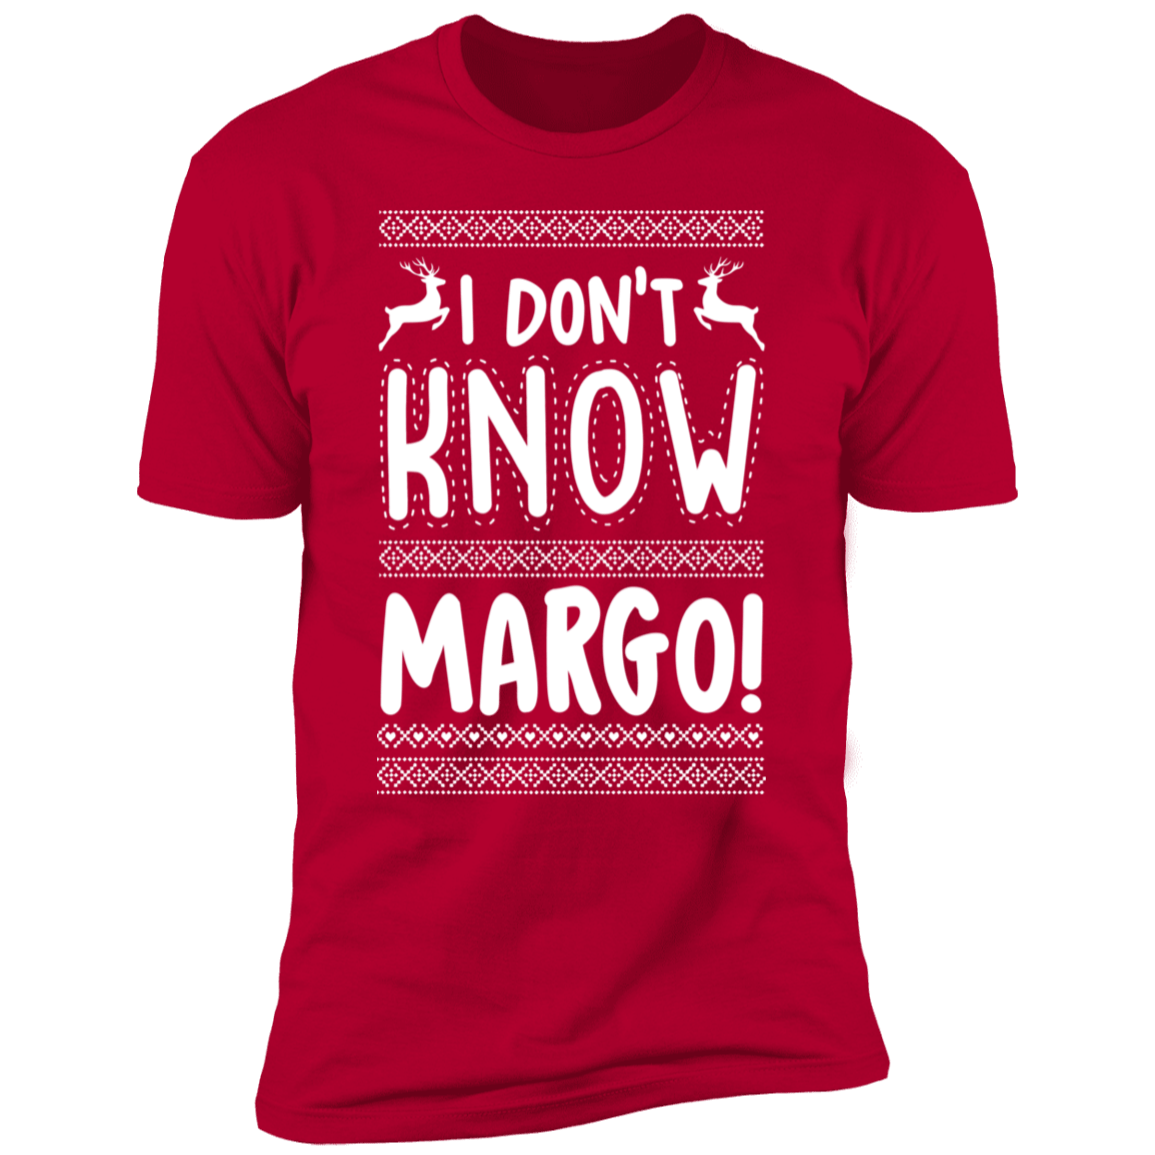 I don't know Margo!